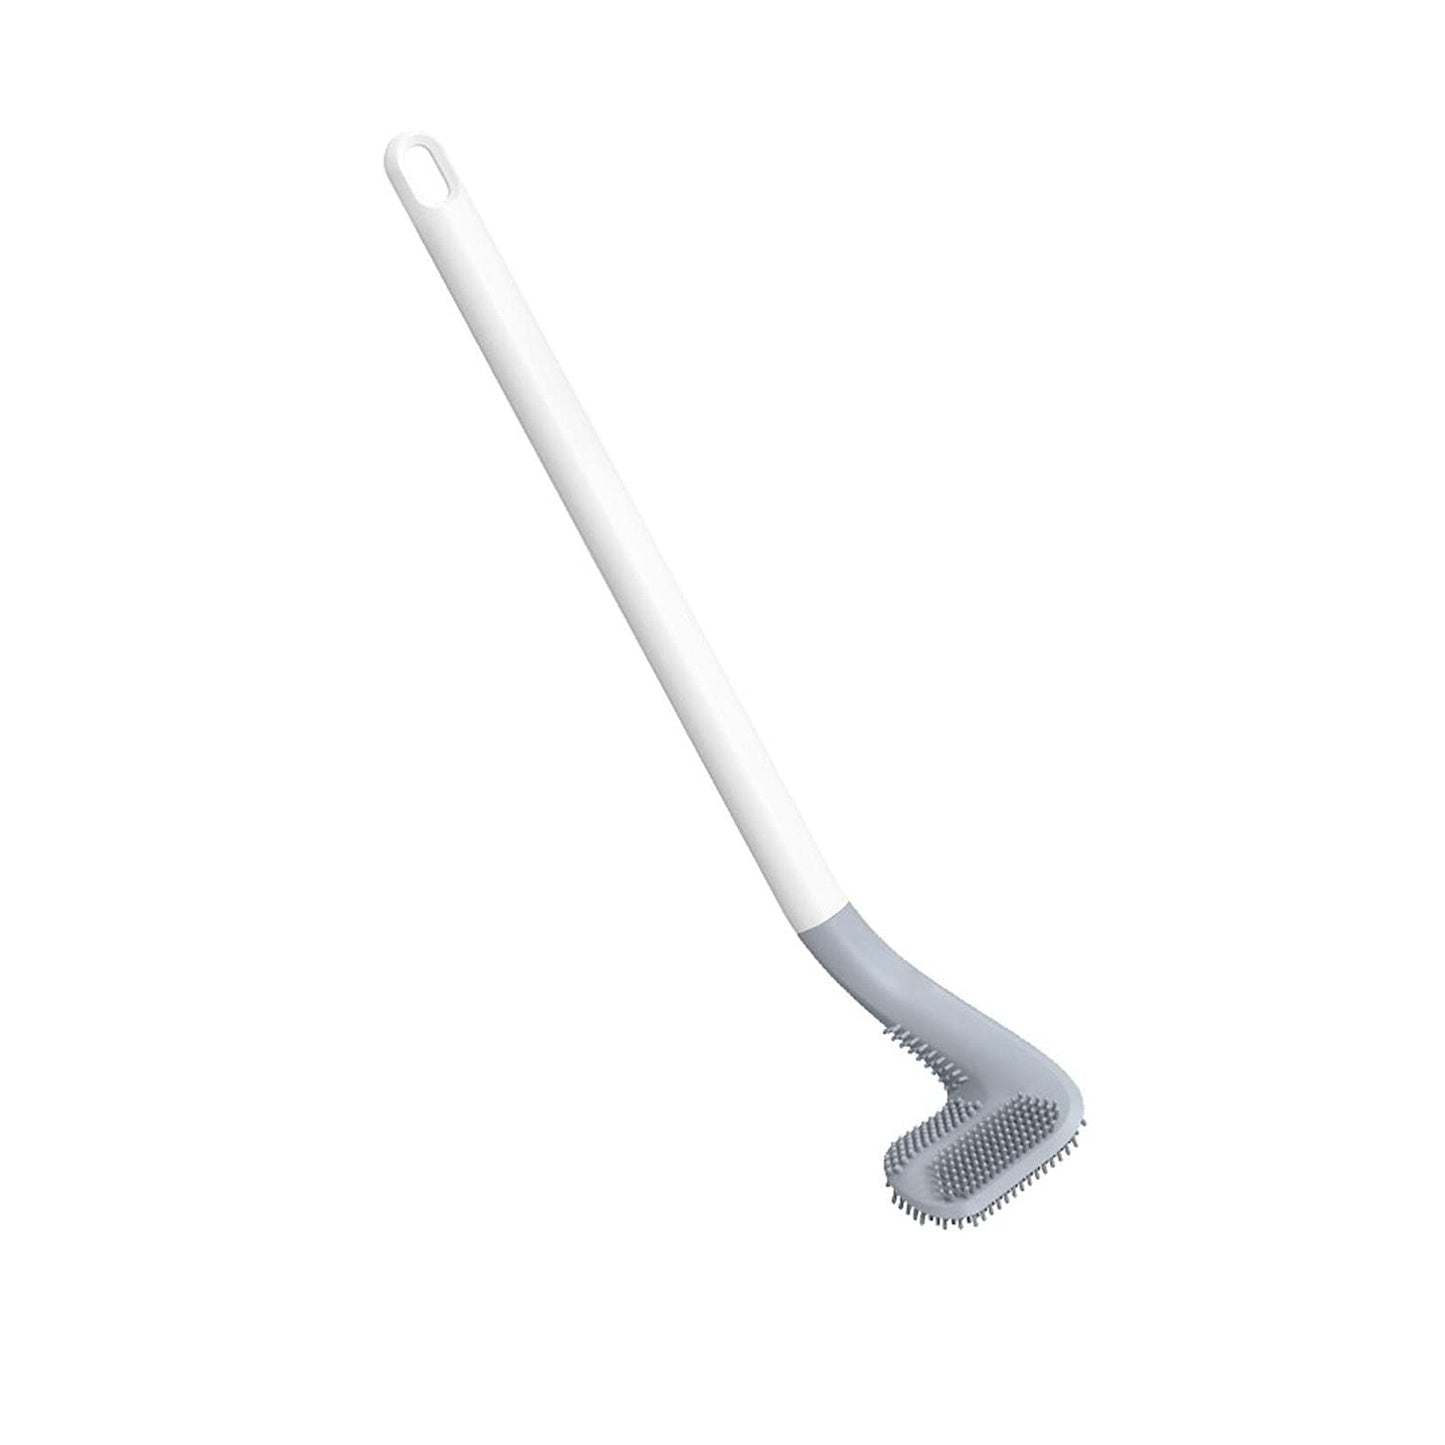 6059A Golf Shape Toilet Cleaner Brush For Bathroom Use DeoDap